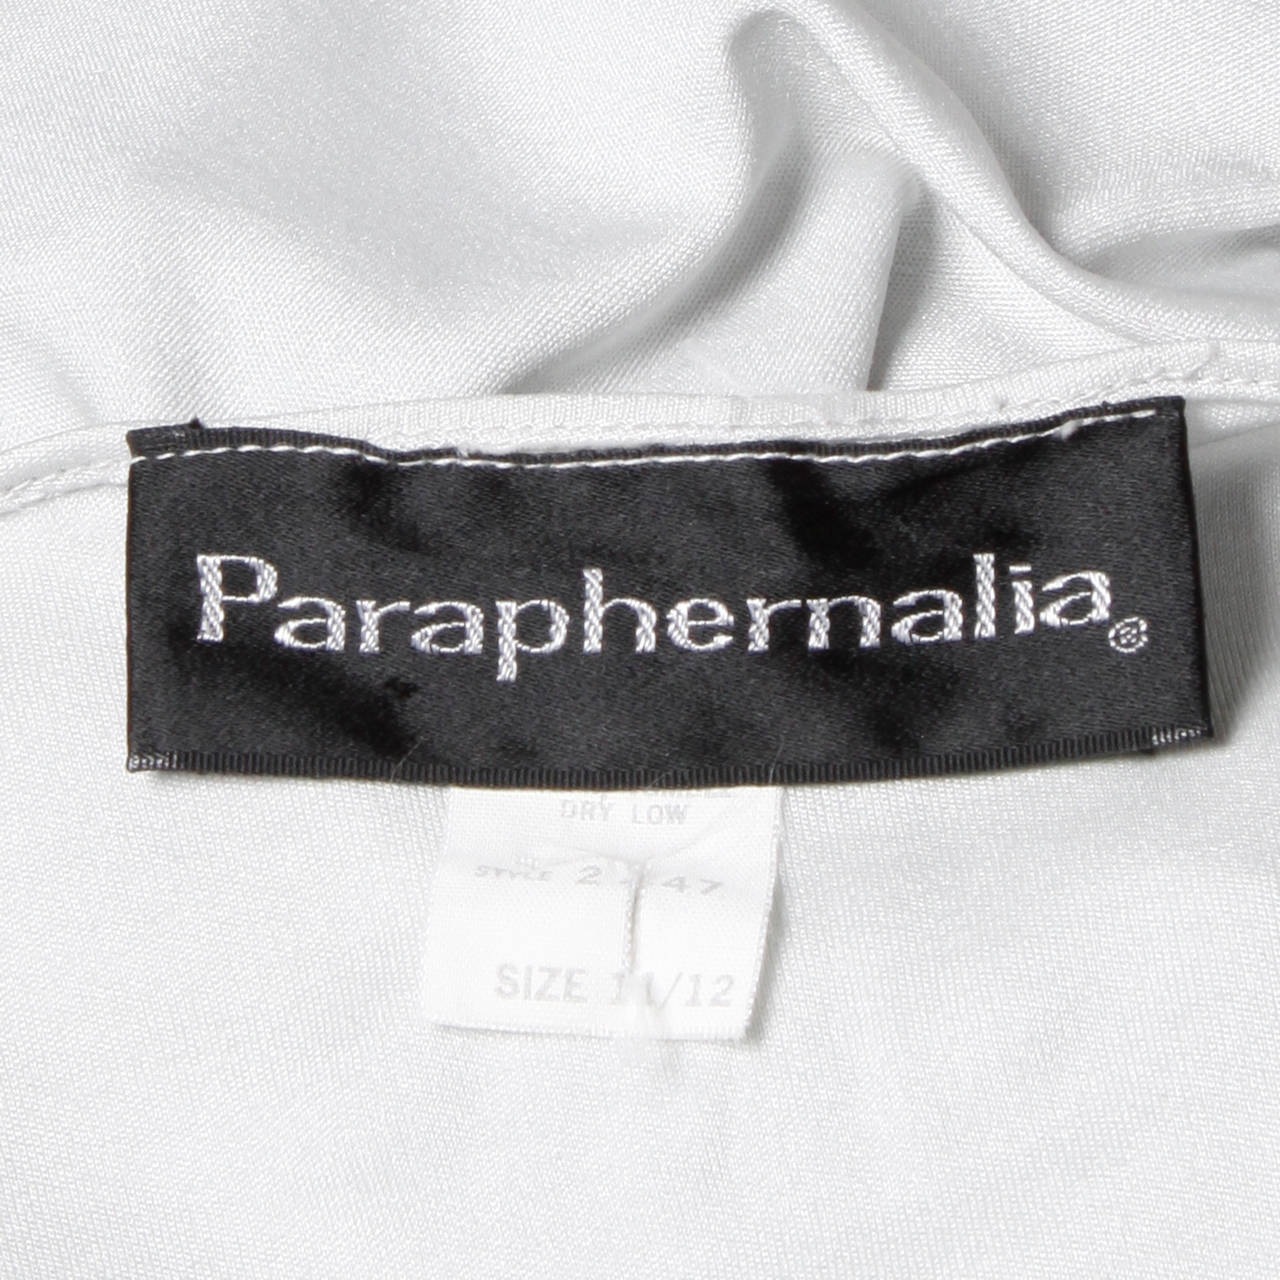 Rare 1970s Paraphernalia Vintage Jersey Knit Dress with a Plunging Neckline 5